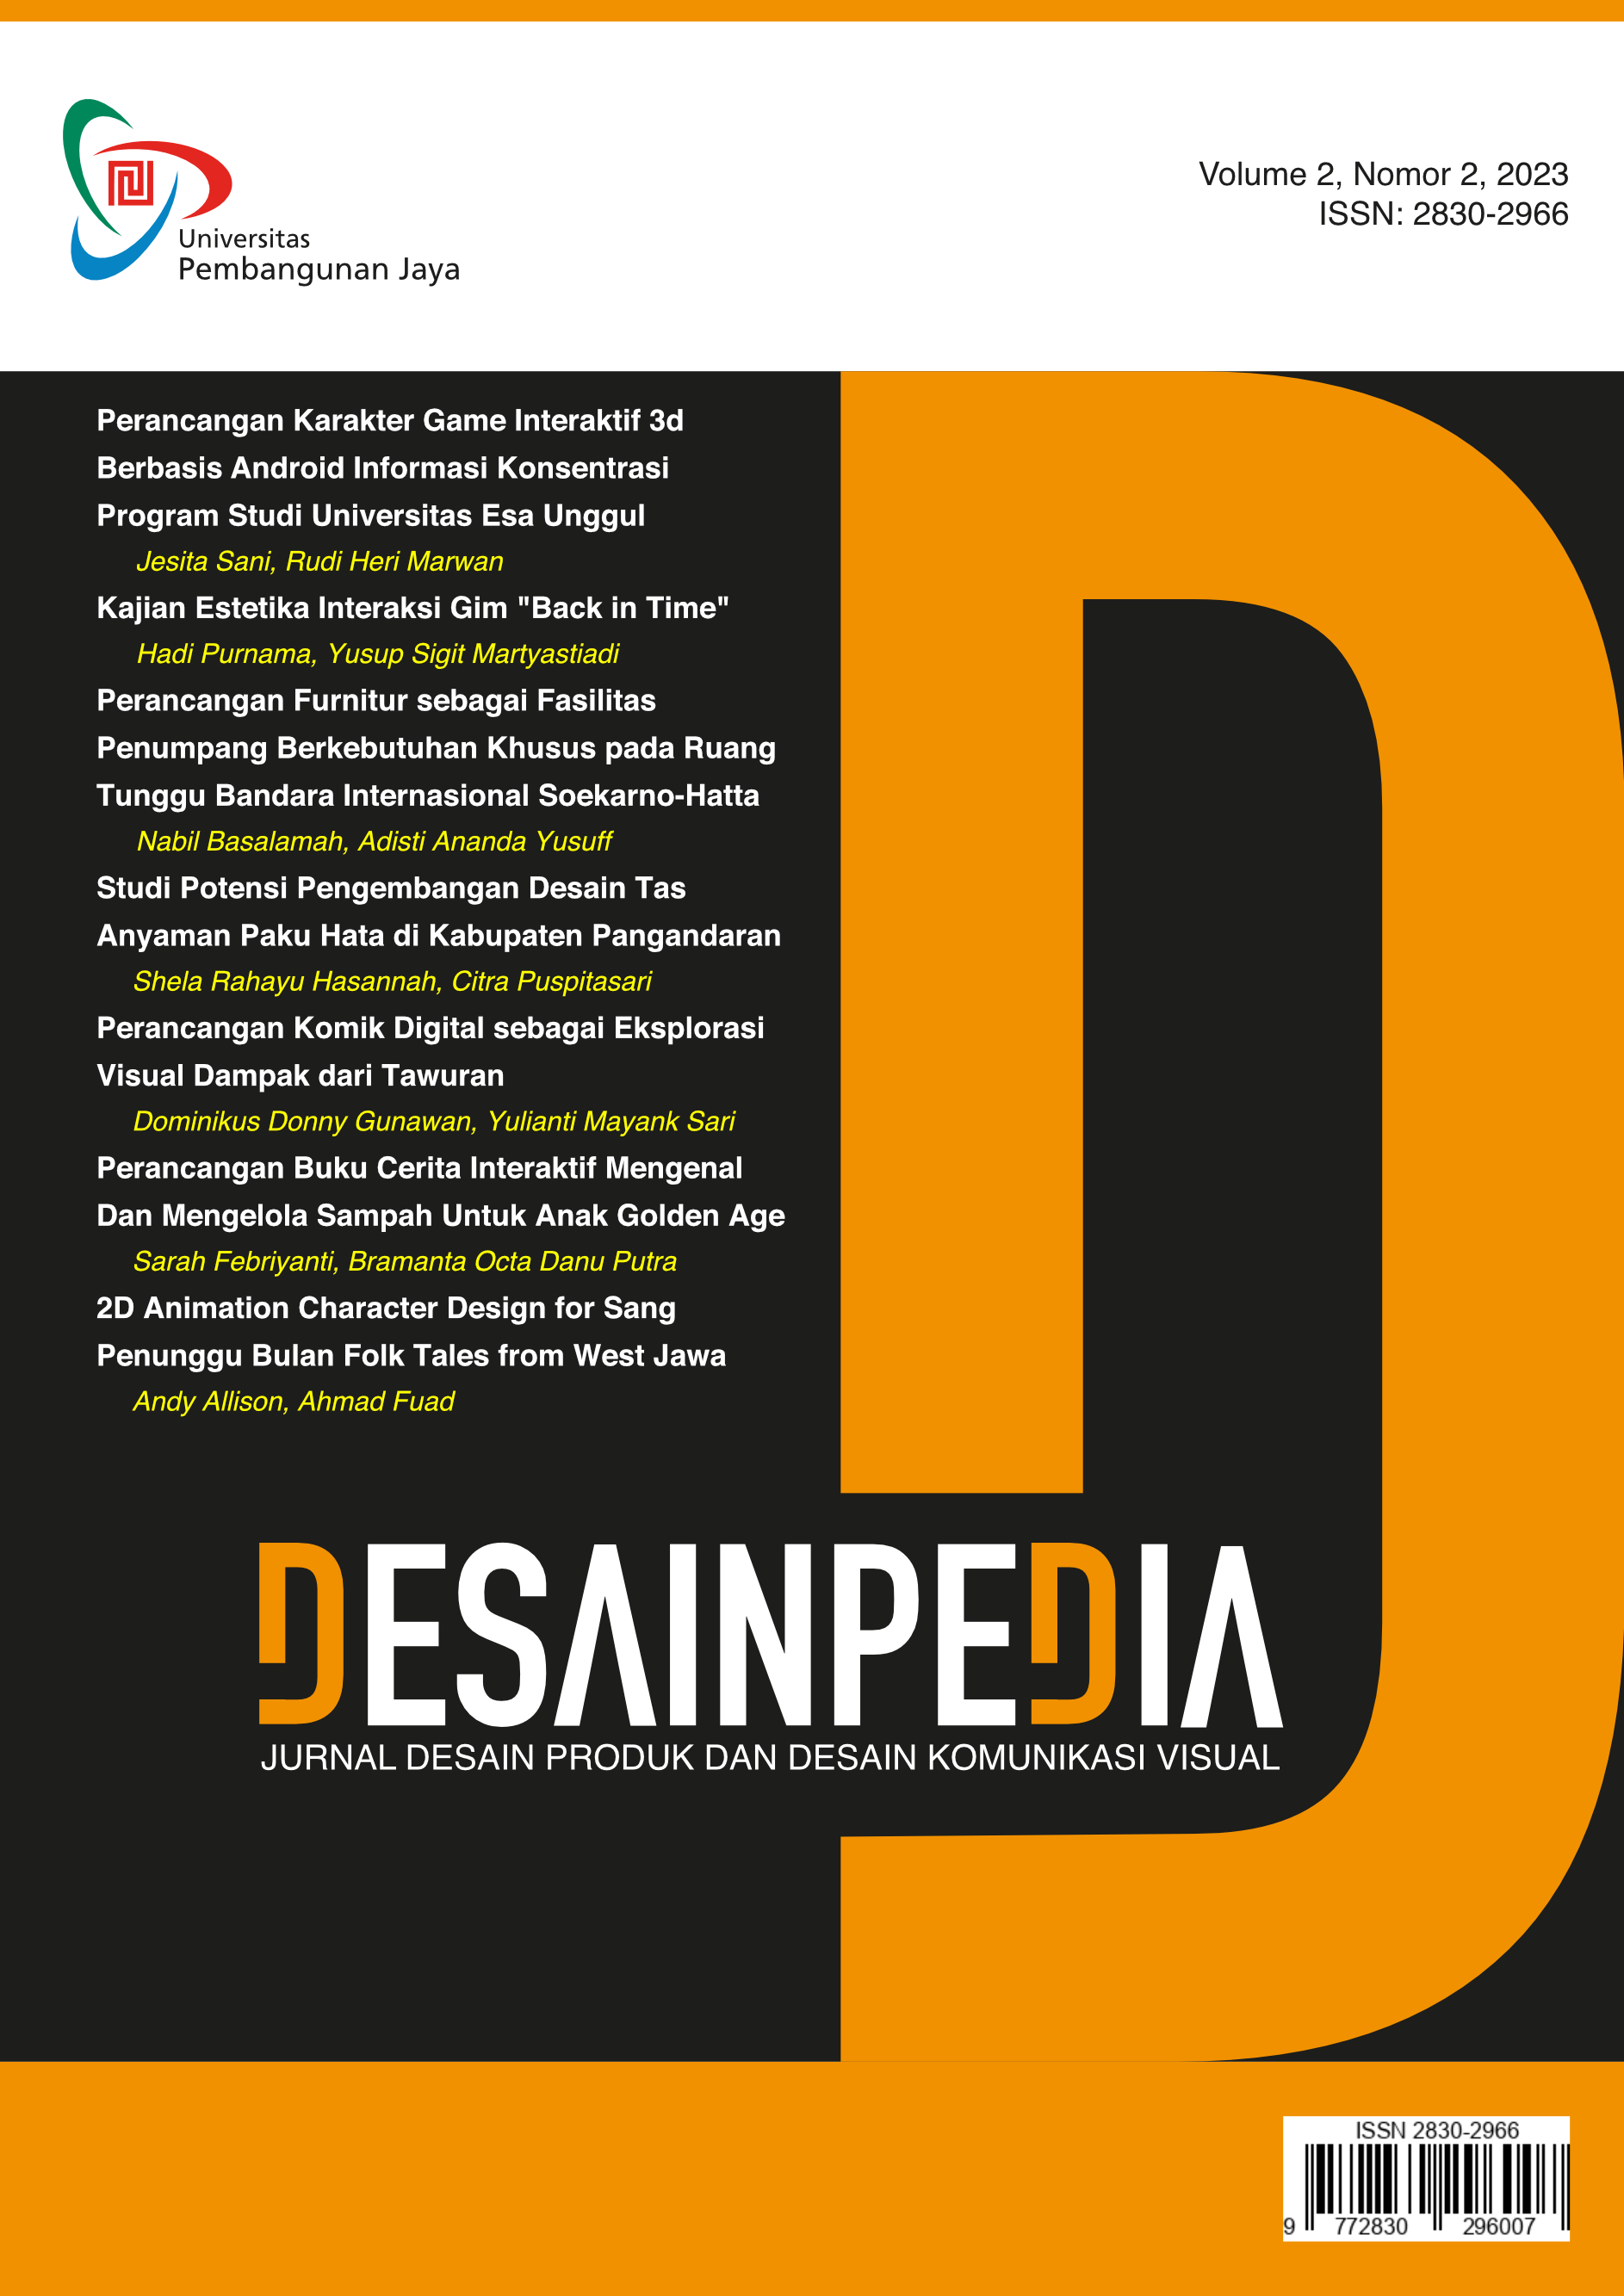 Sampul Jurnal Desainpedia: Urban design, lifestyle & behaviour